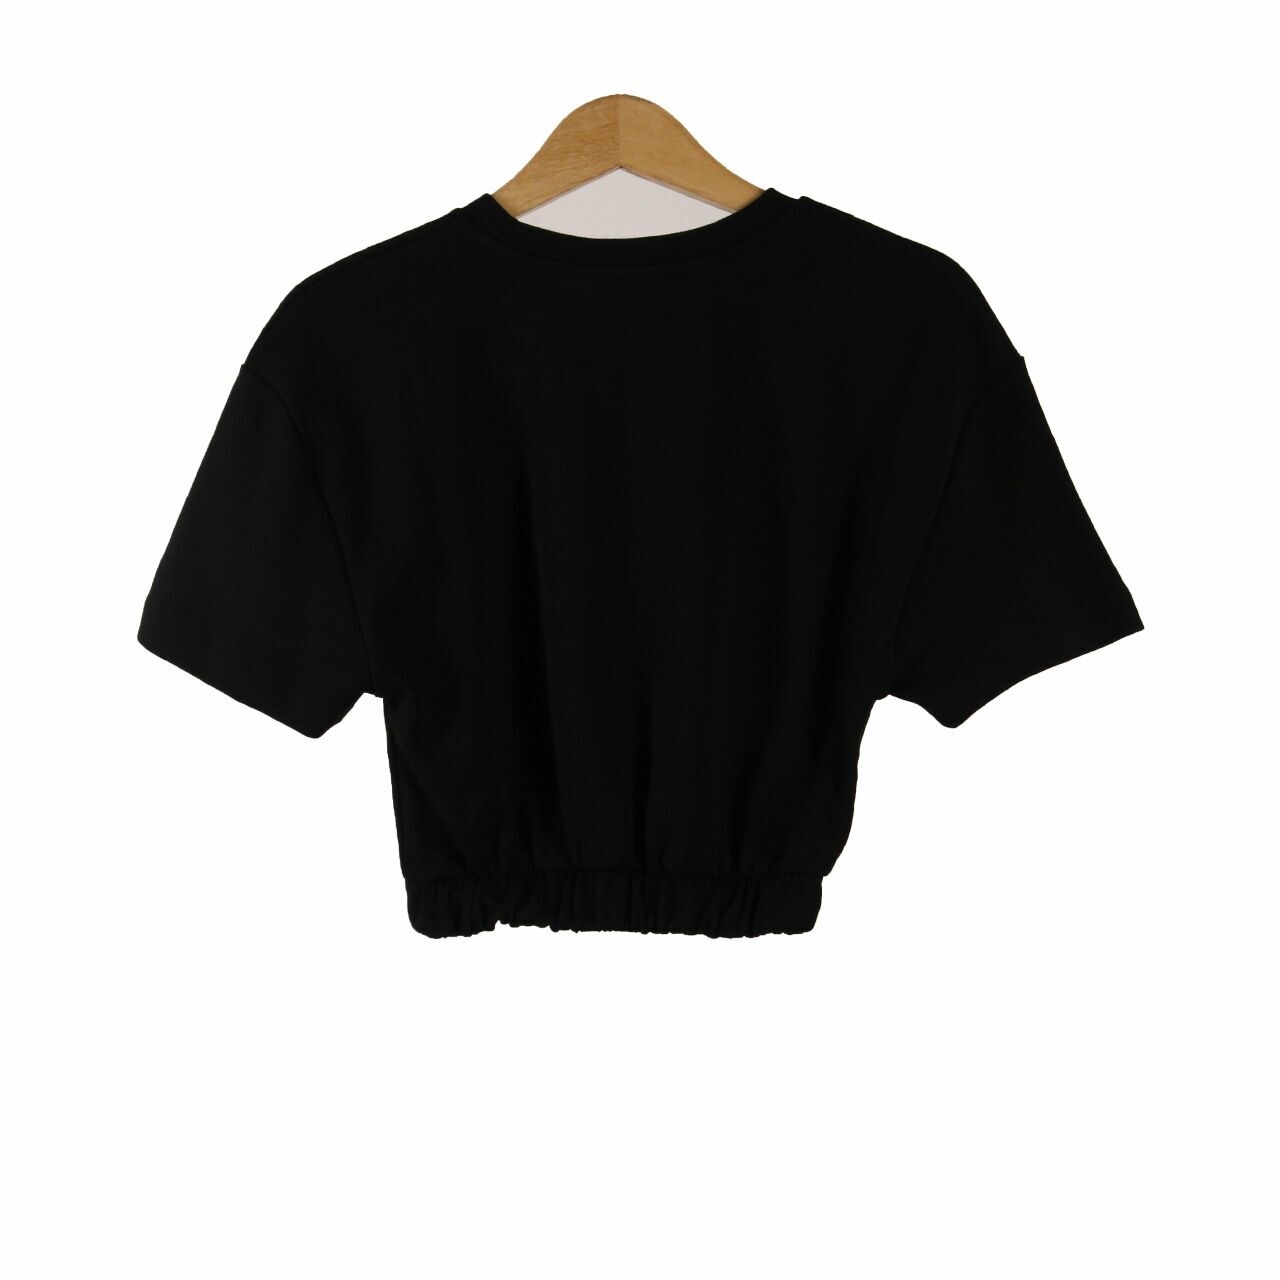 Zara Black T-Shirt Cropped